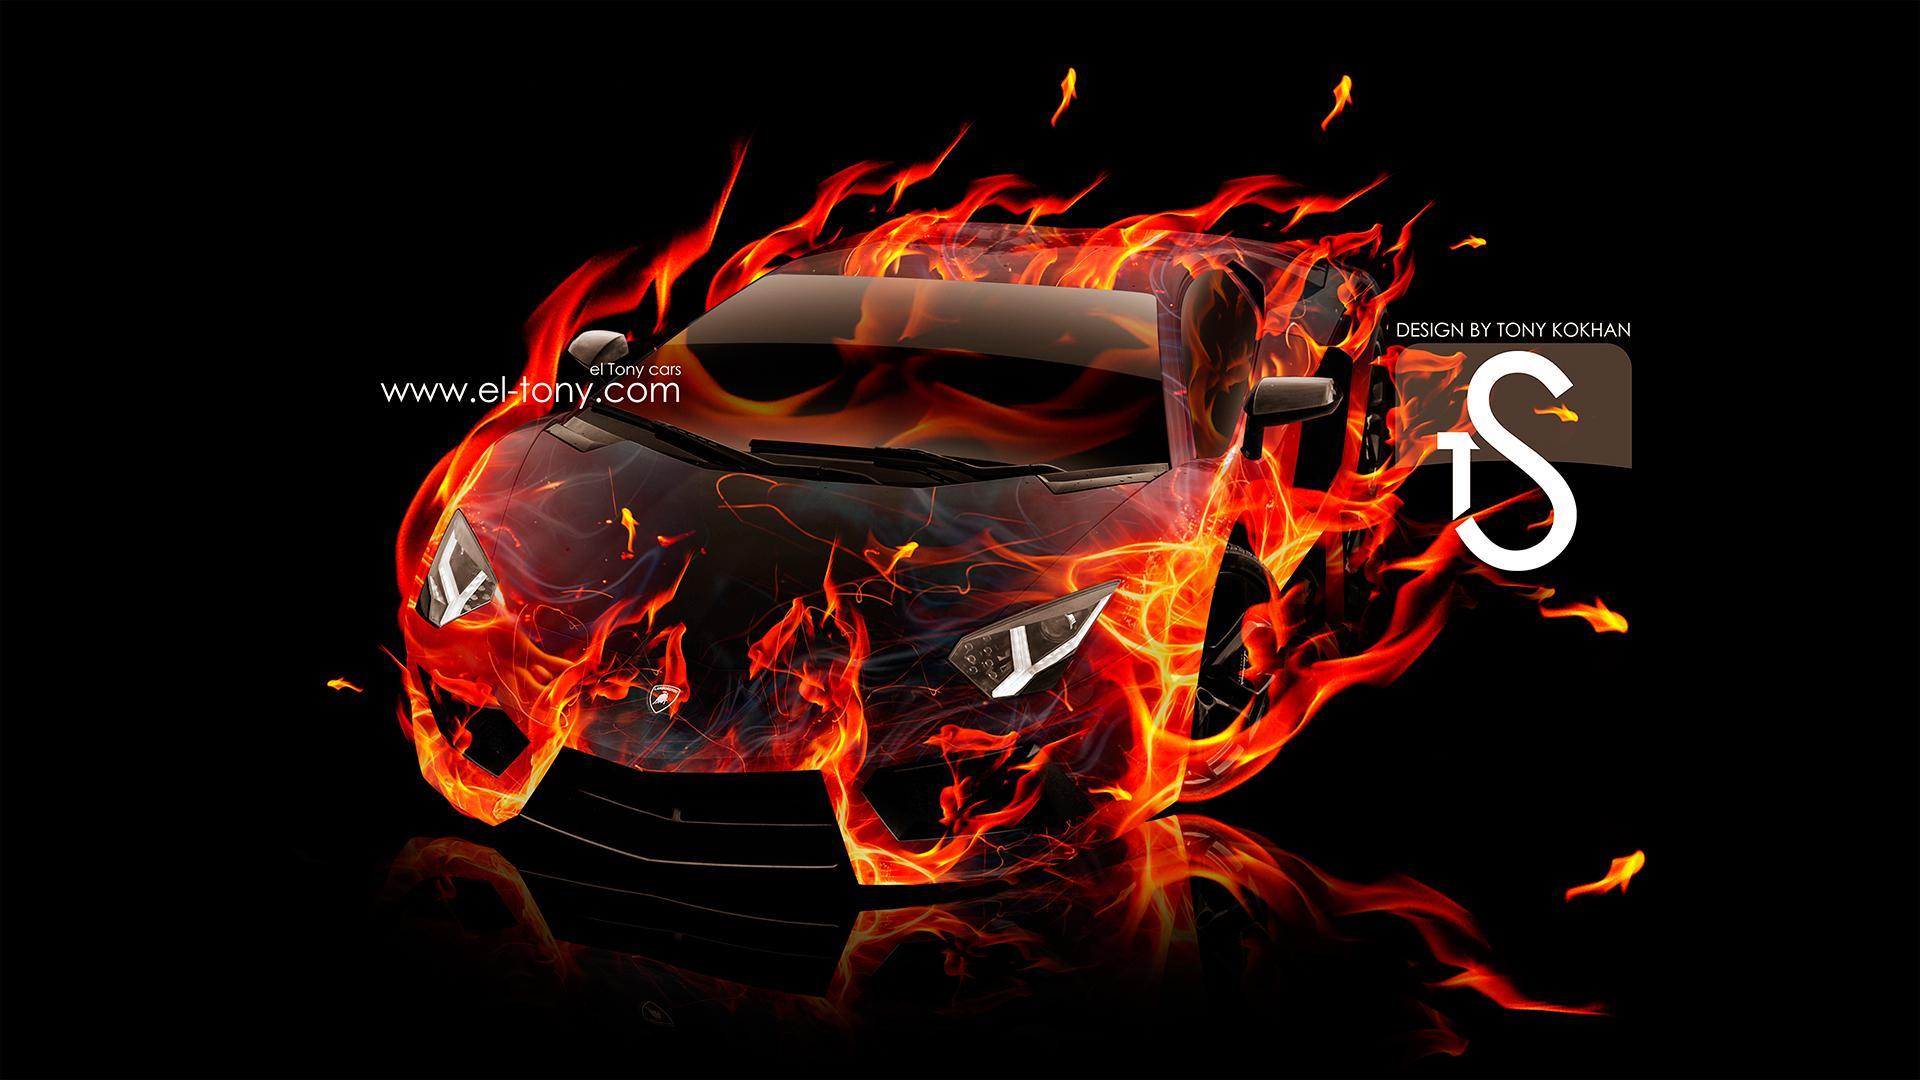 Bugatti Fire Wallpapers - Top Free Bugatti Fire Backgrounds